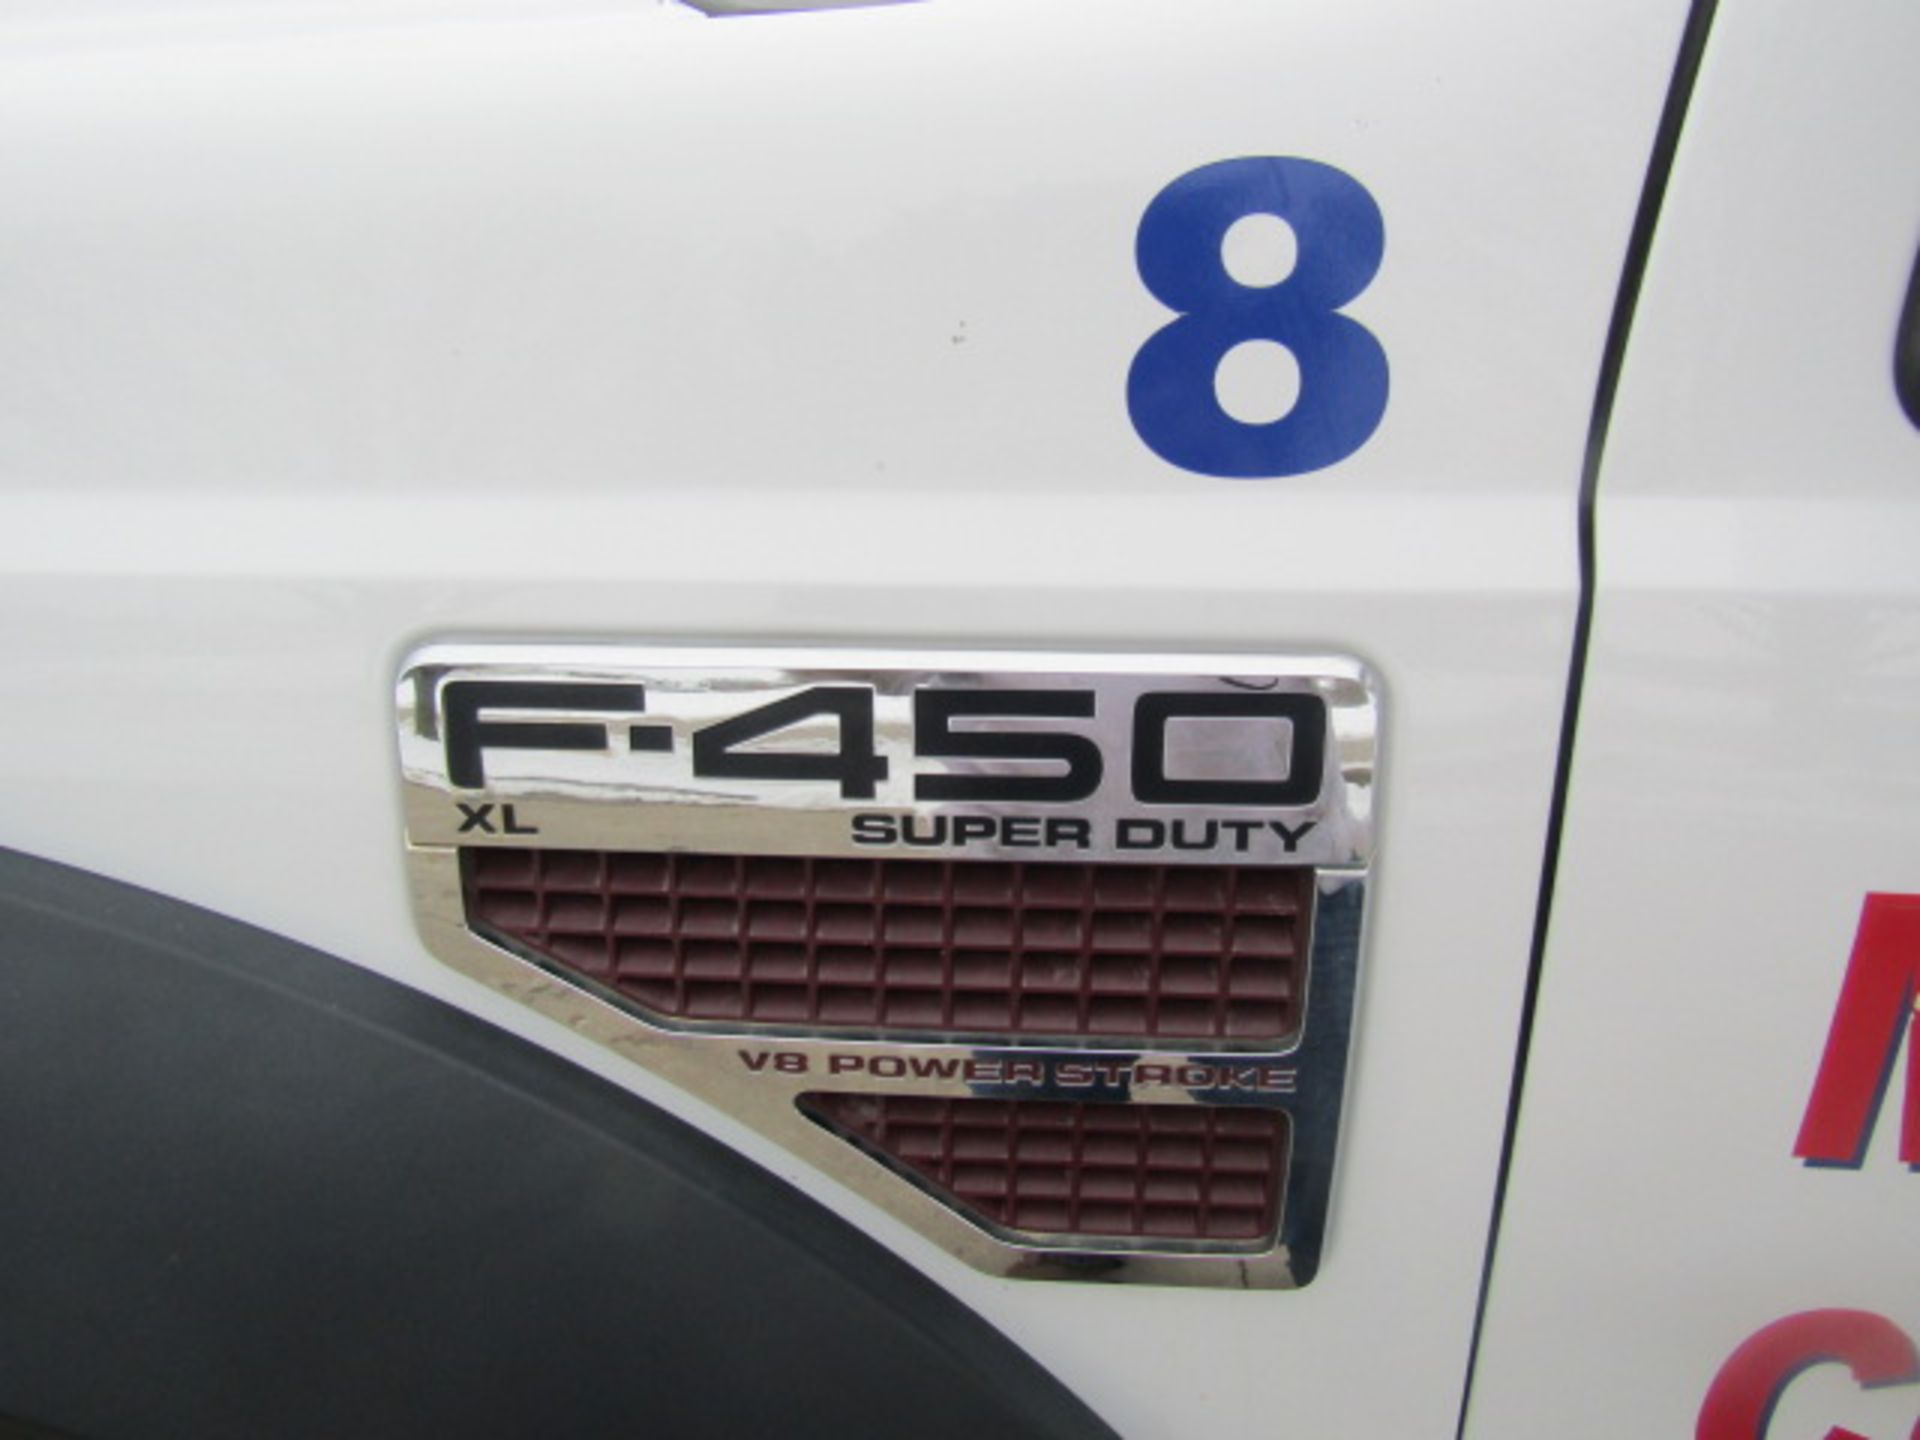 2008 Ford F450 Wall Super Duty Truck, Vin # 1FDXX46R68EC77947, Automatic Transmission, V8 Power - Image 23 of 24